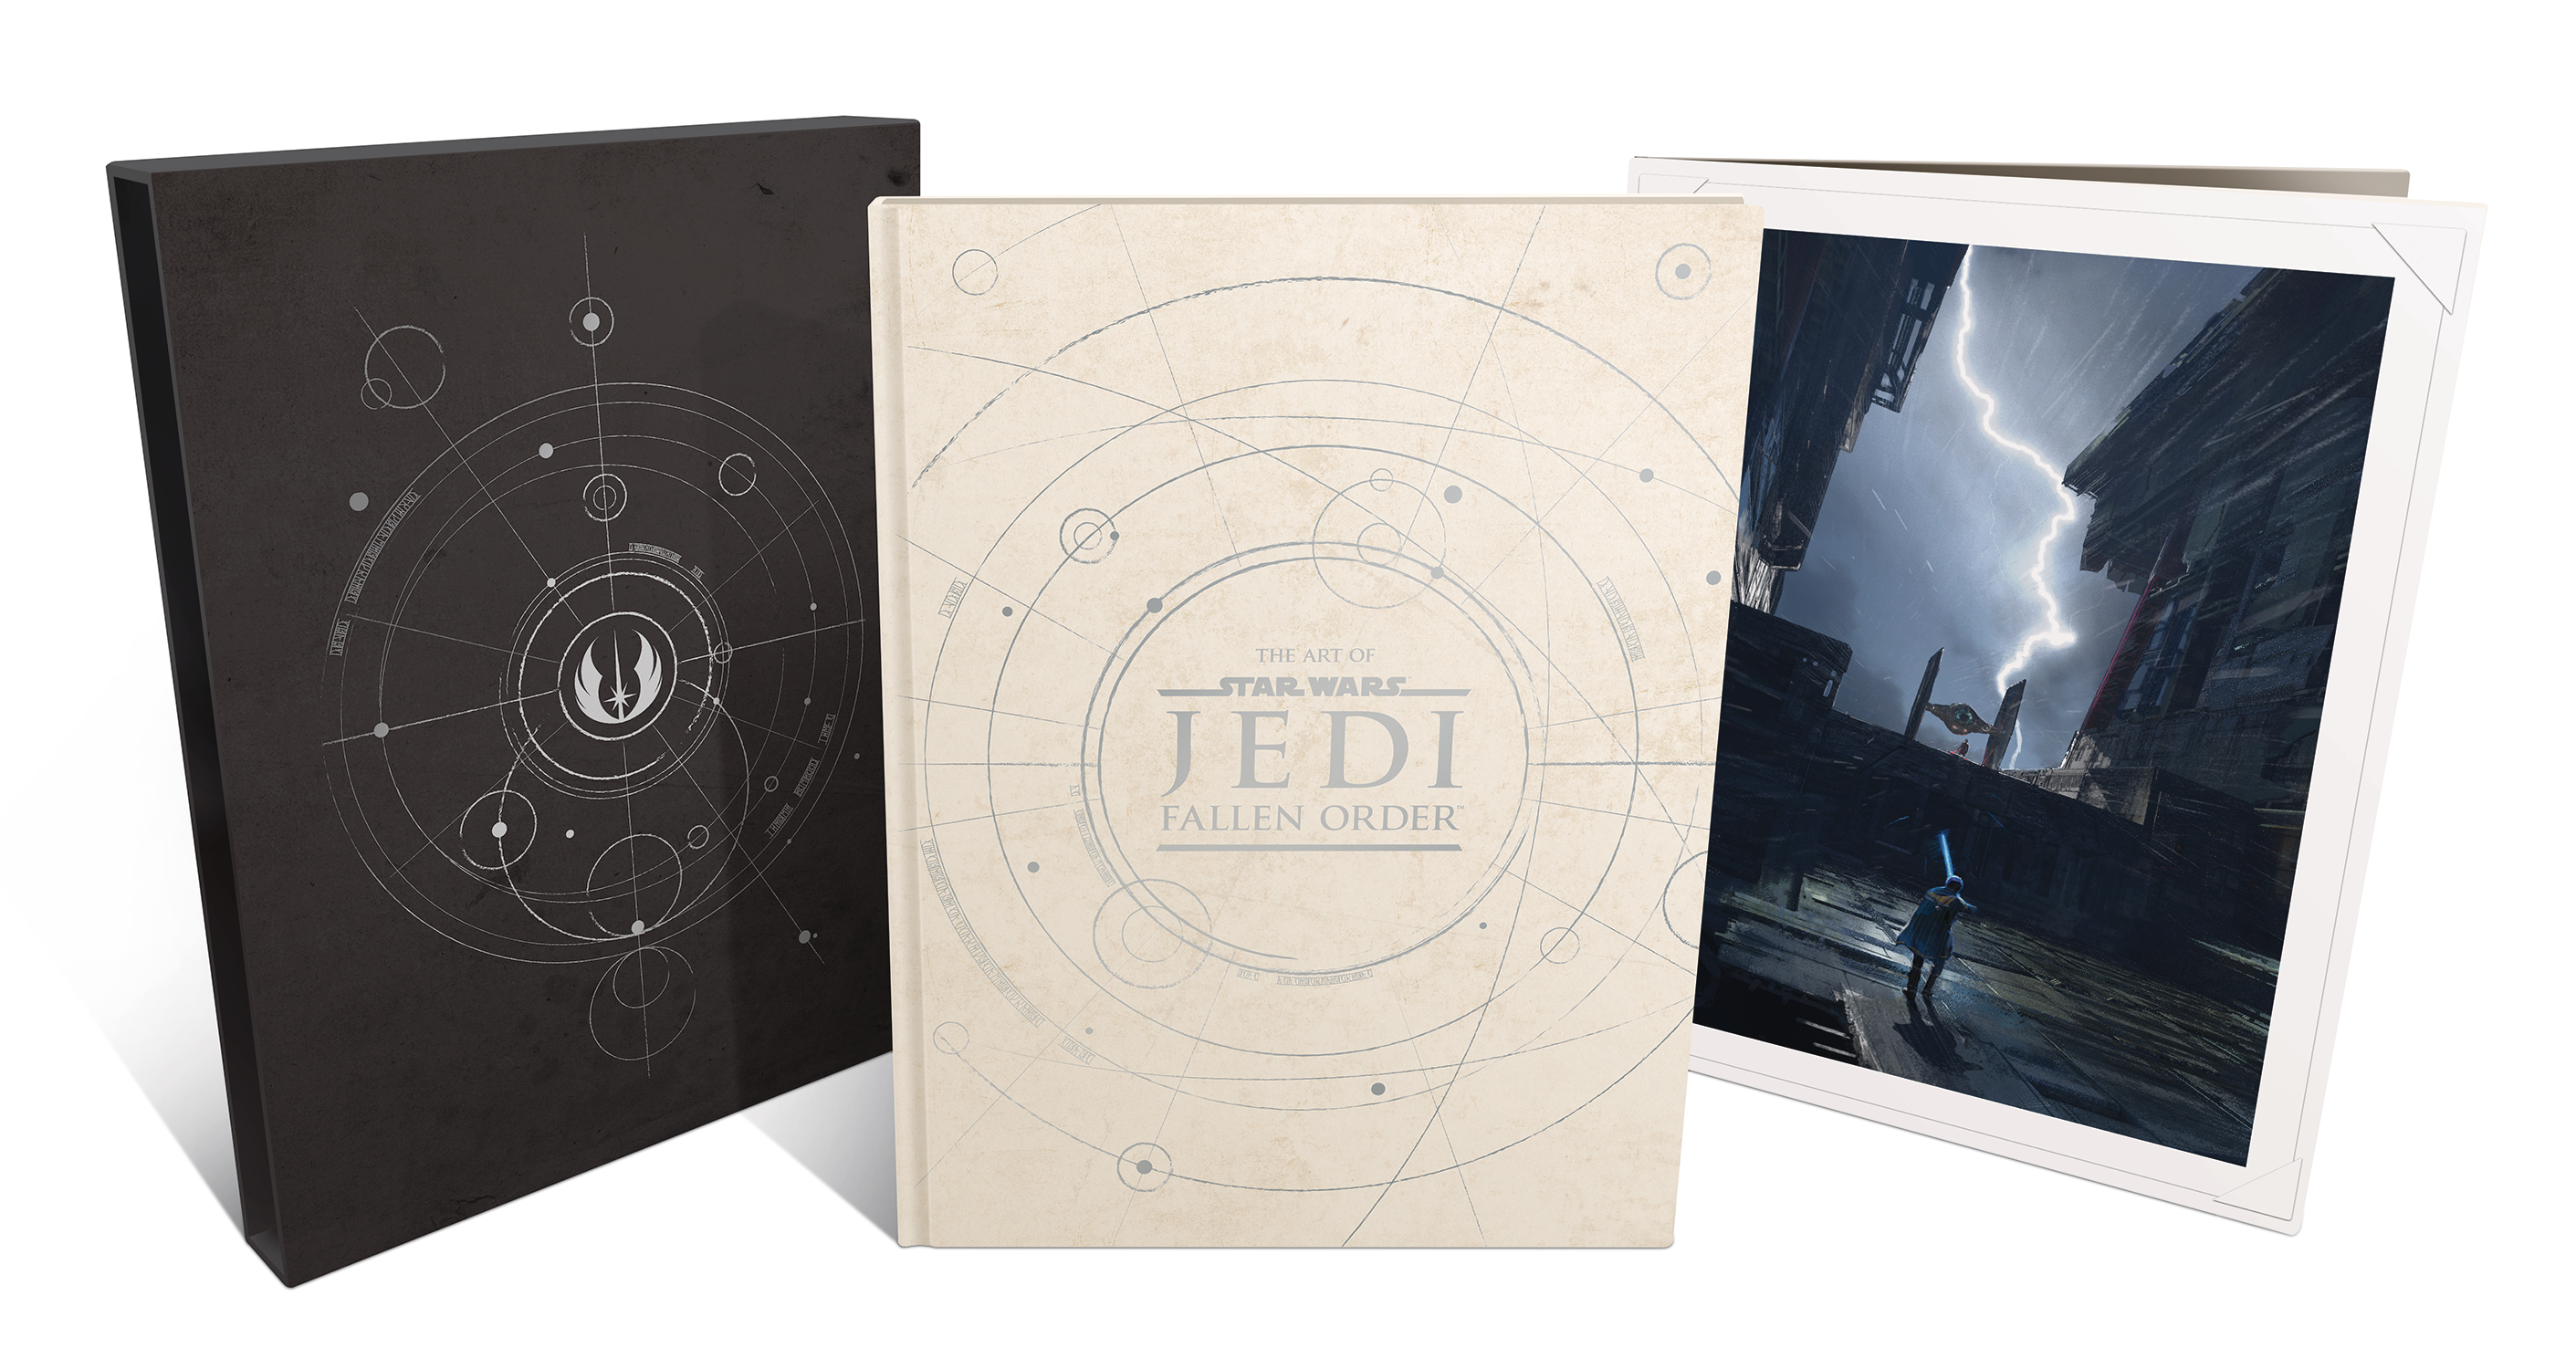 Art of Star Wars Jedi Fallen Order Limited Edition Hardcover